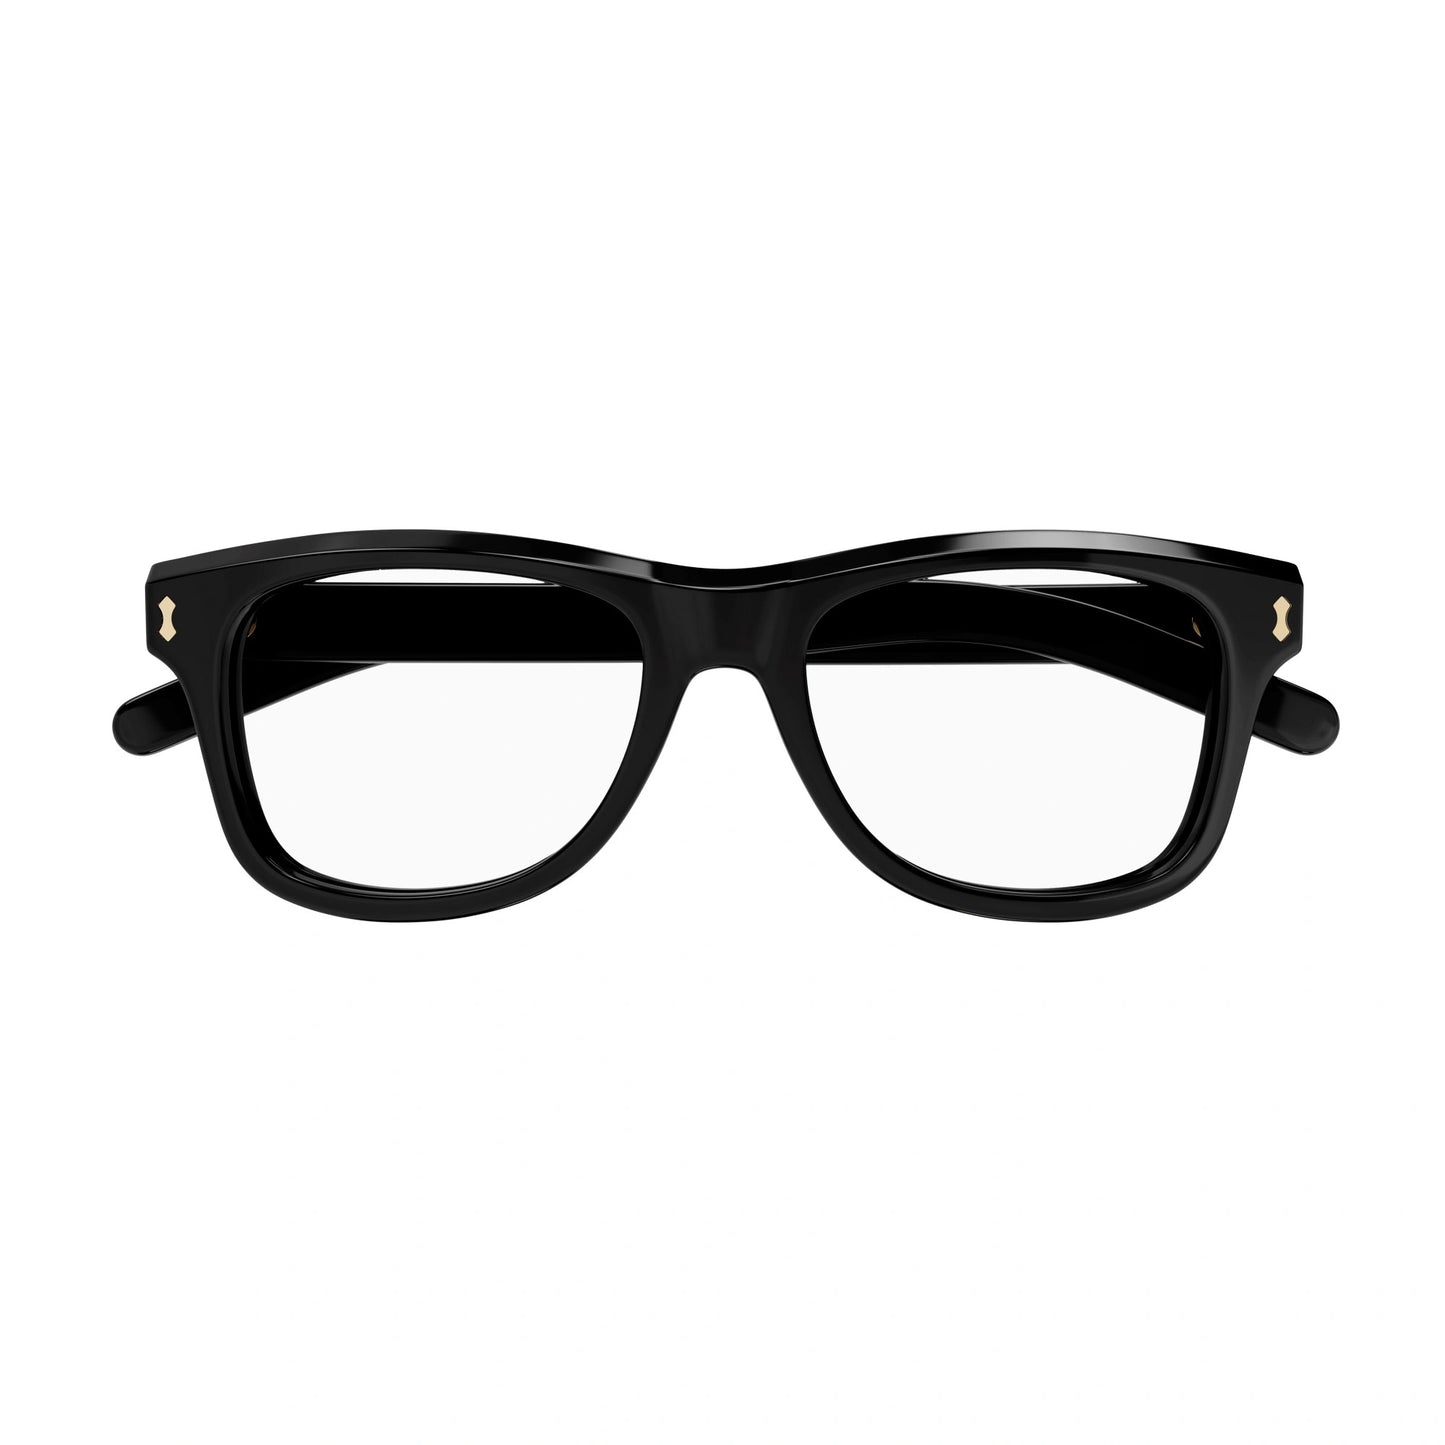 Gucci GG1526o-005 54mm New Eyeglasses